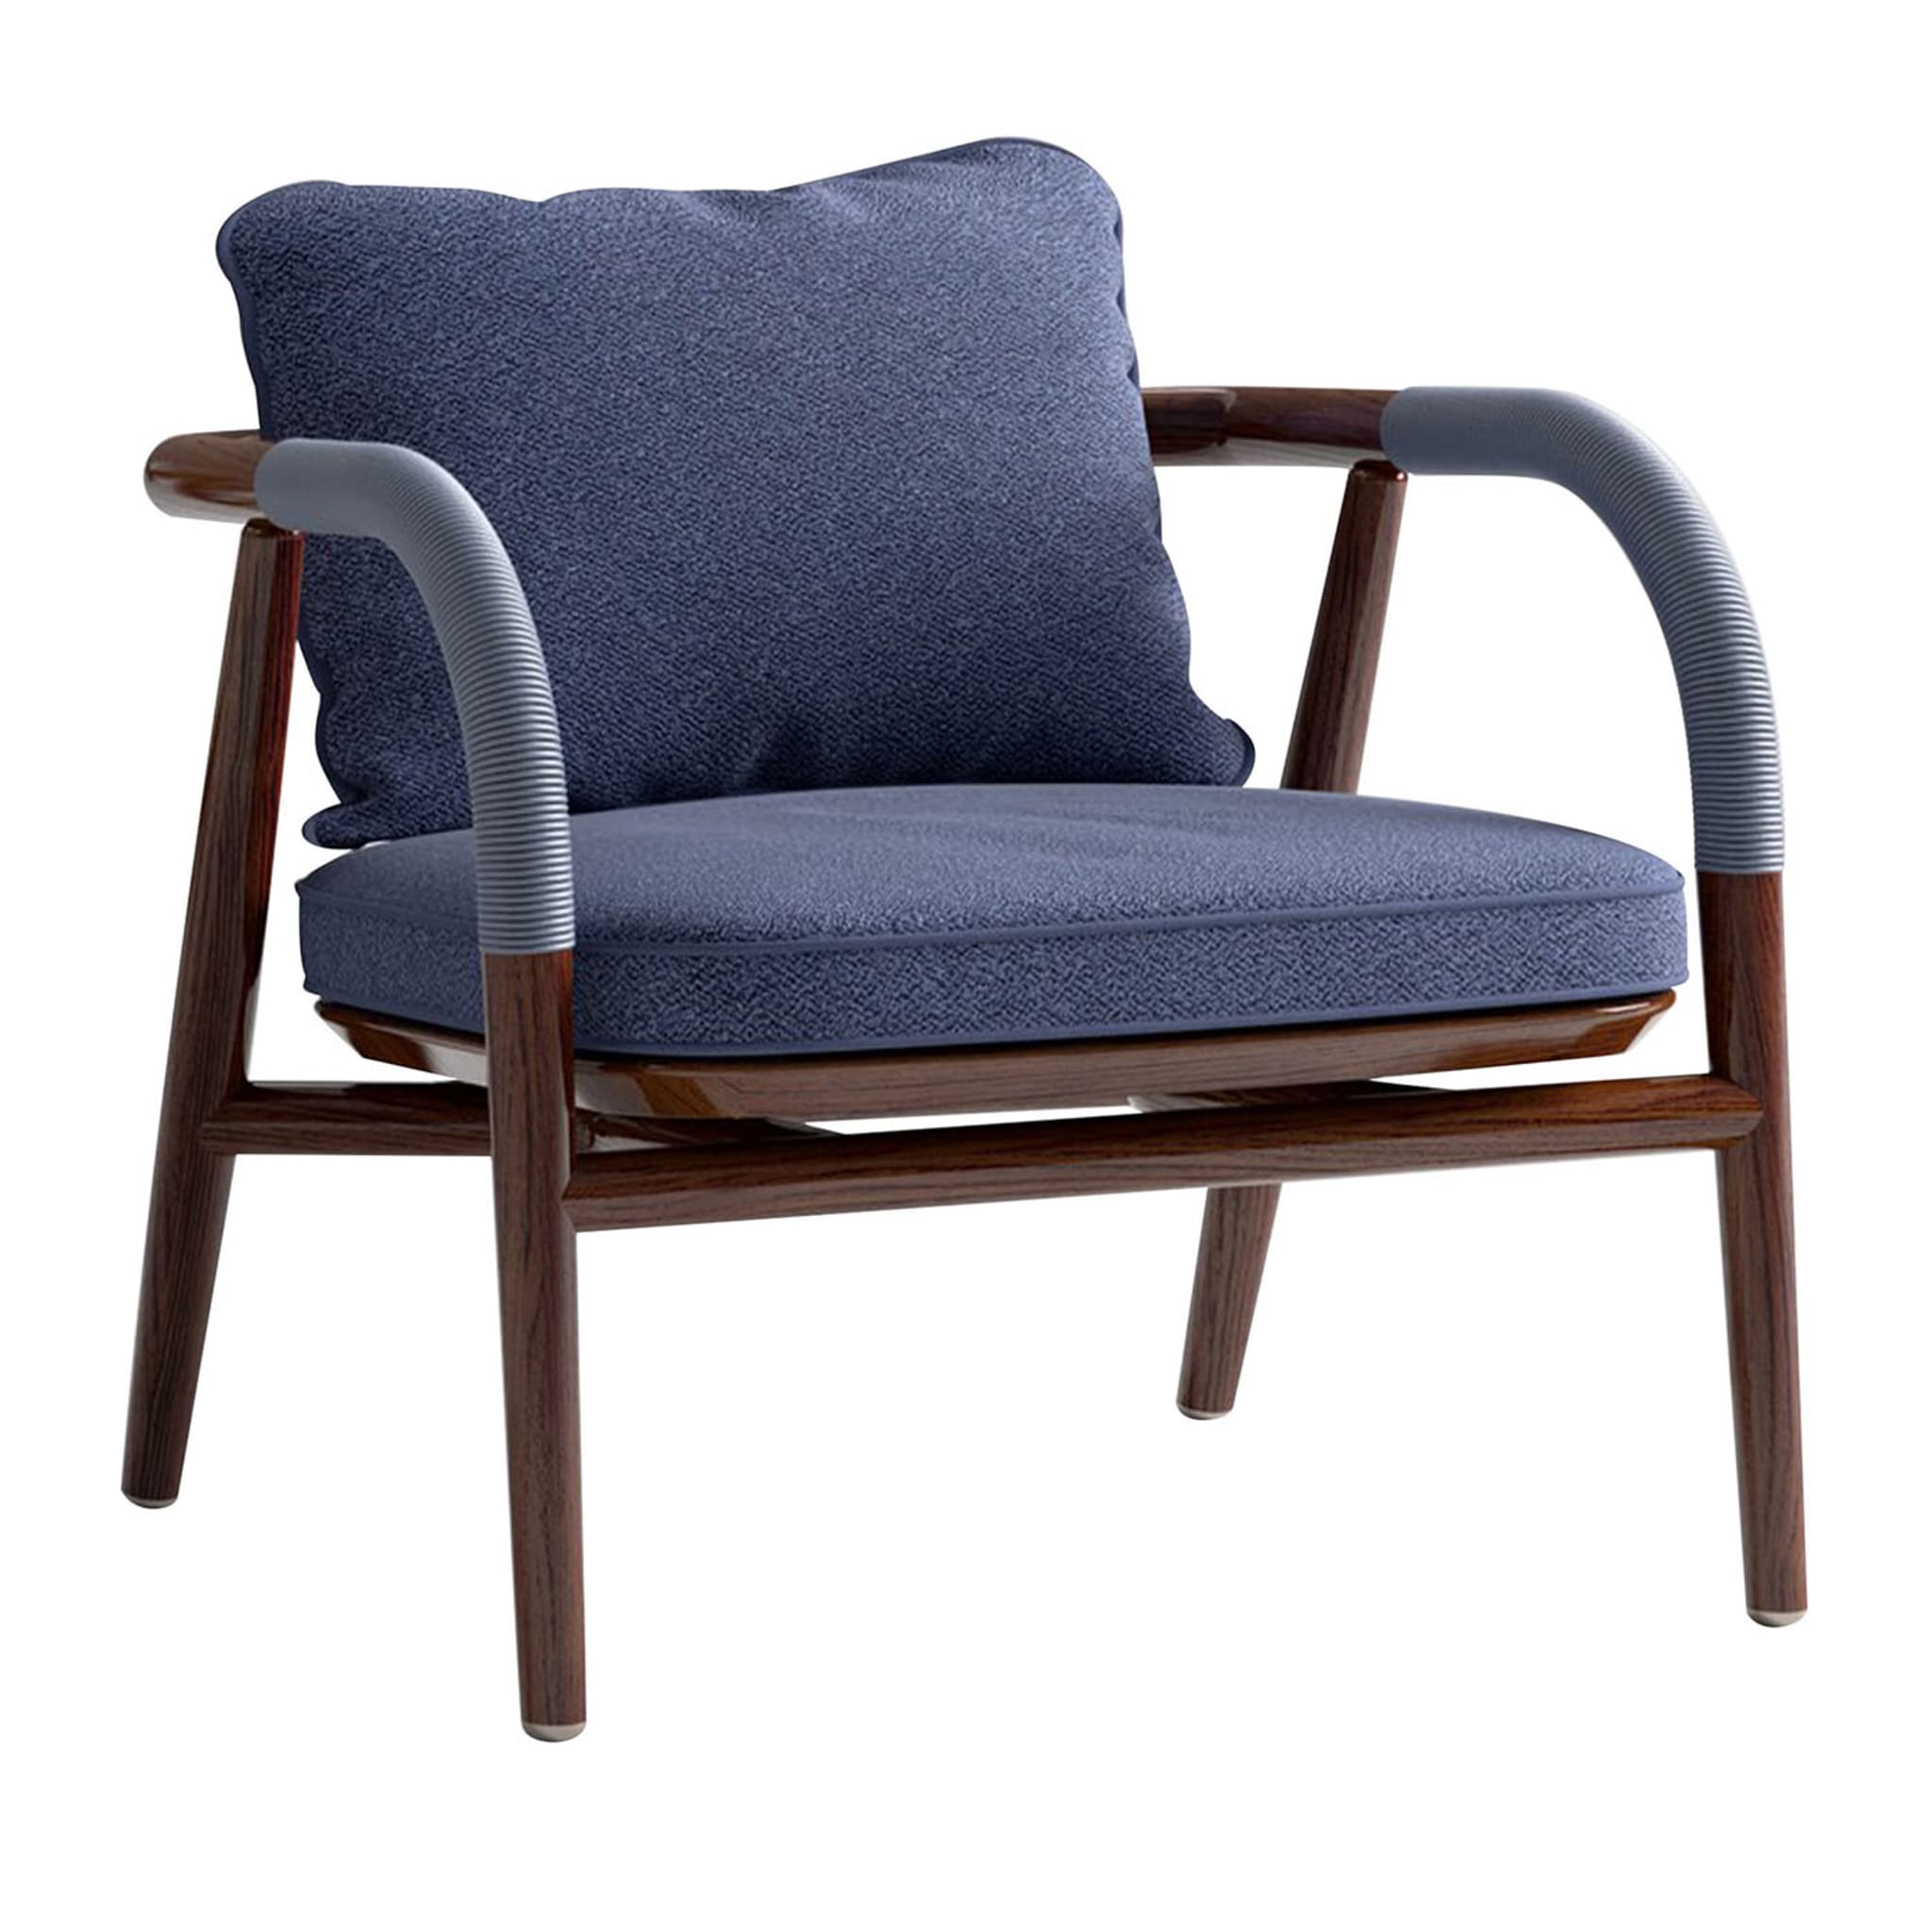 Blue Lounge Chair - Main view